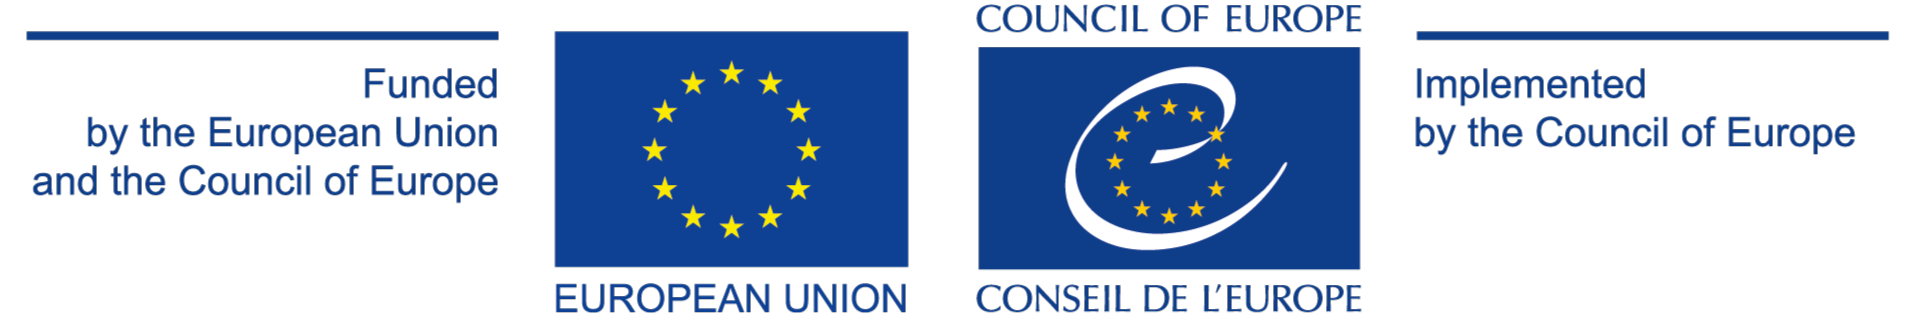 Eu council. Совет Европы логотип. Council of the European Union. Европейский Союз логотип. Funded by the European Union лого.